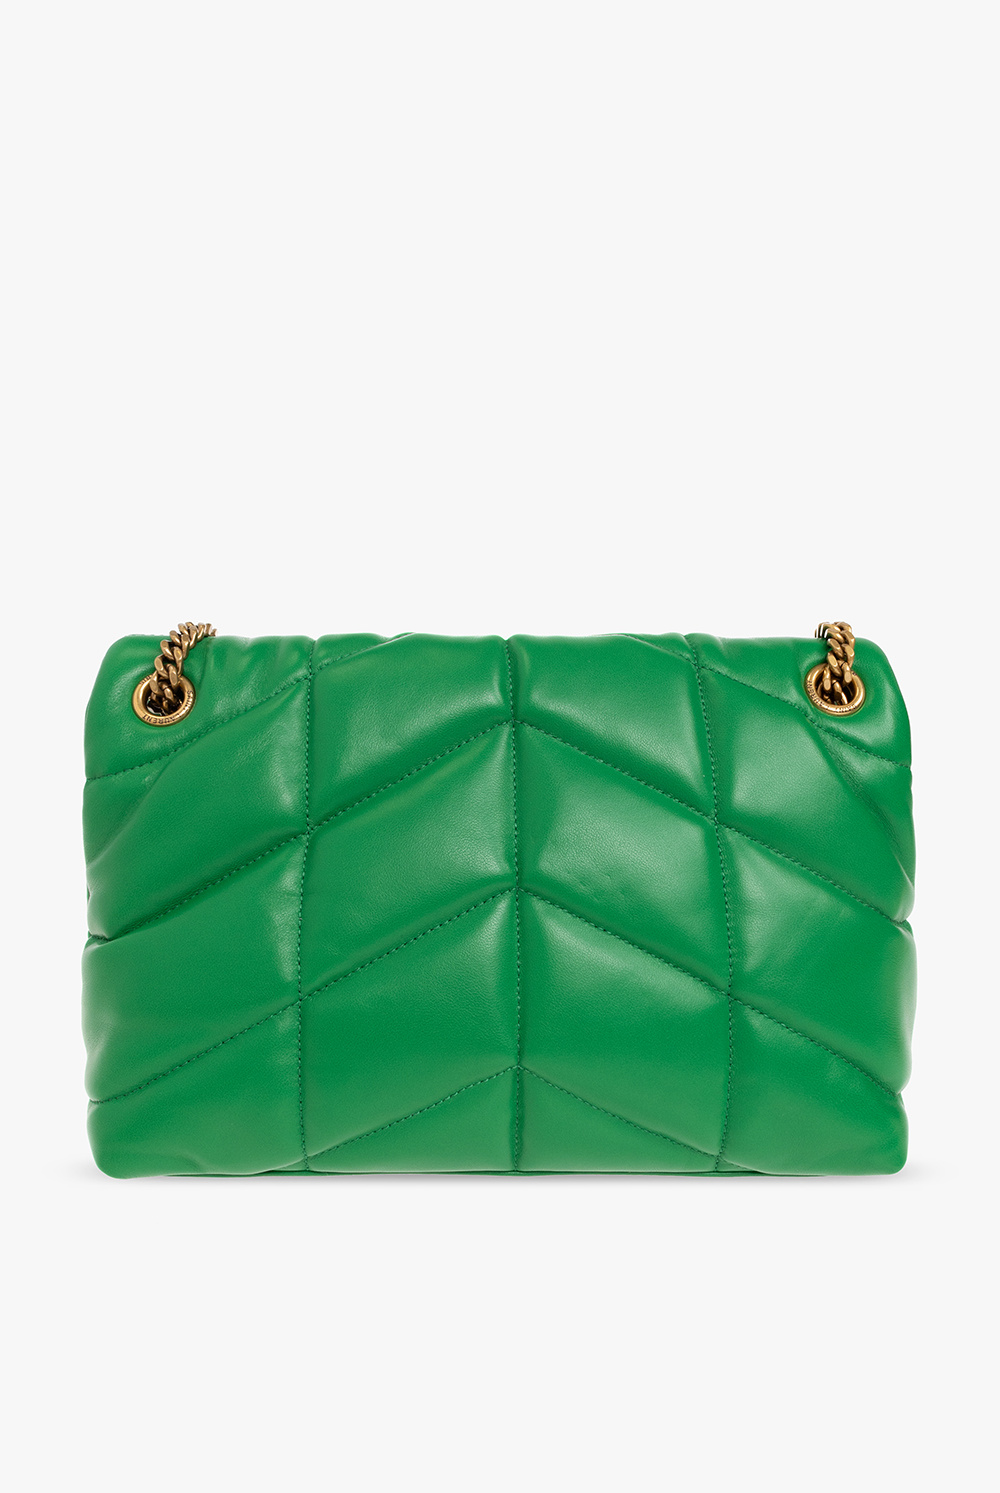 Saint Laurent ‘Puffer Small’ shoulder bag